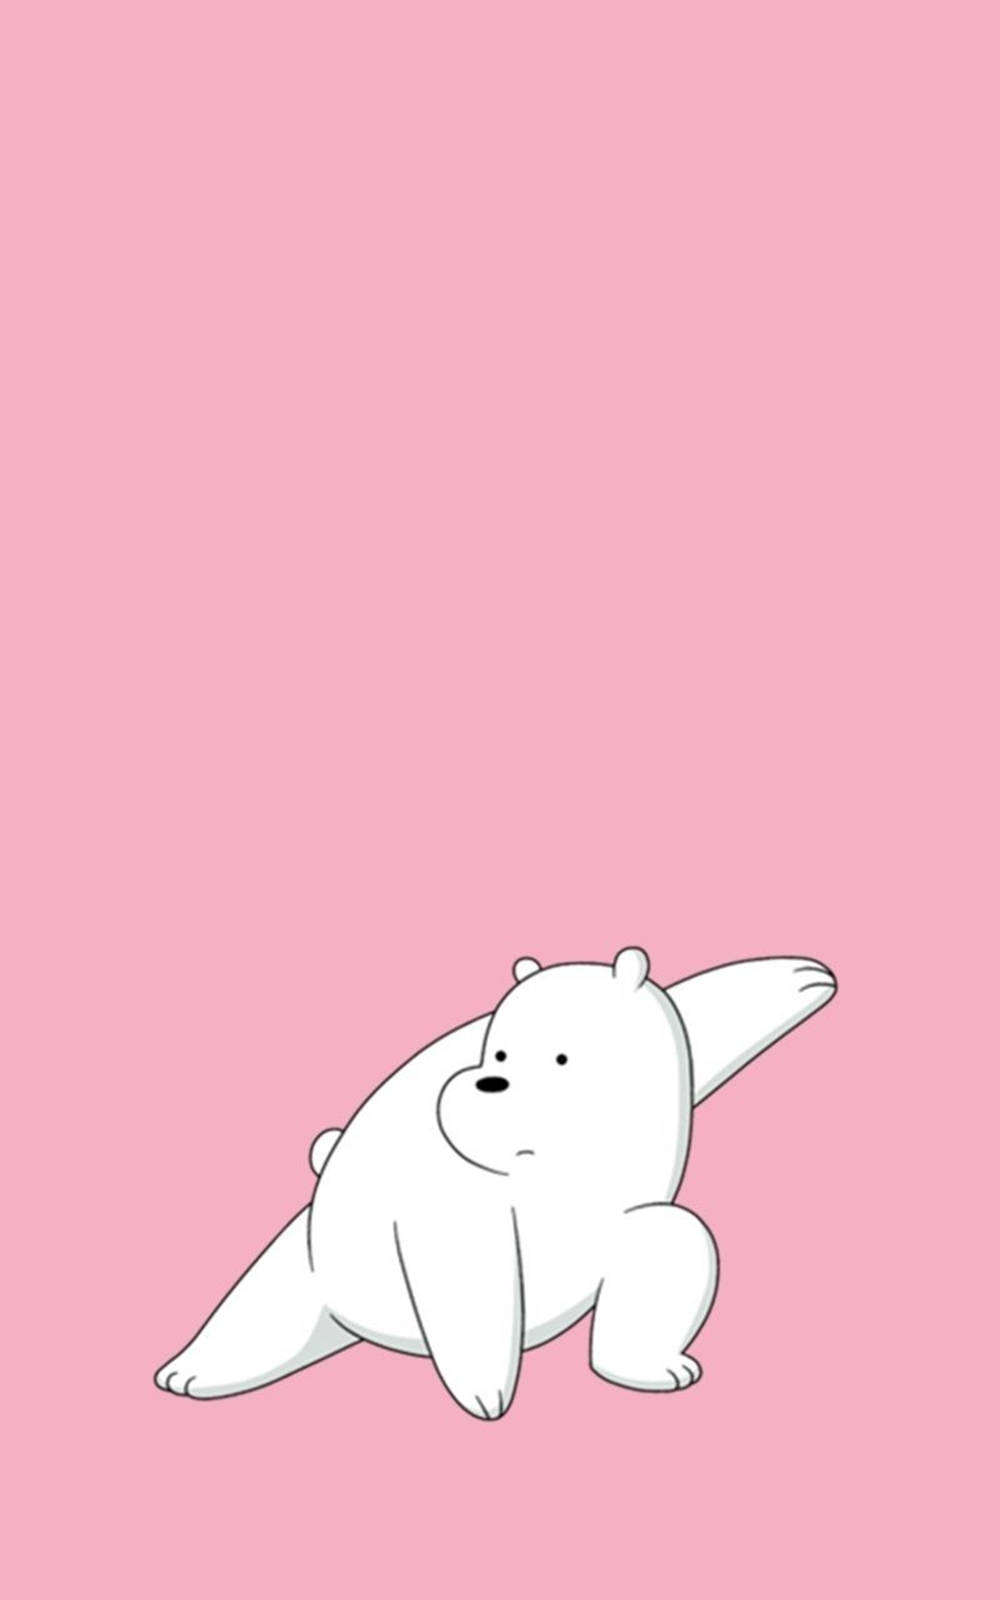 Ice Bear Cartoon In Fighting Stance